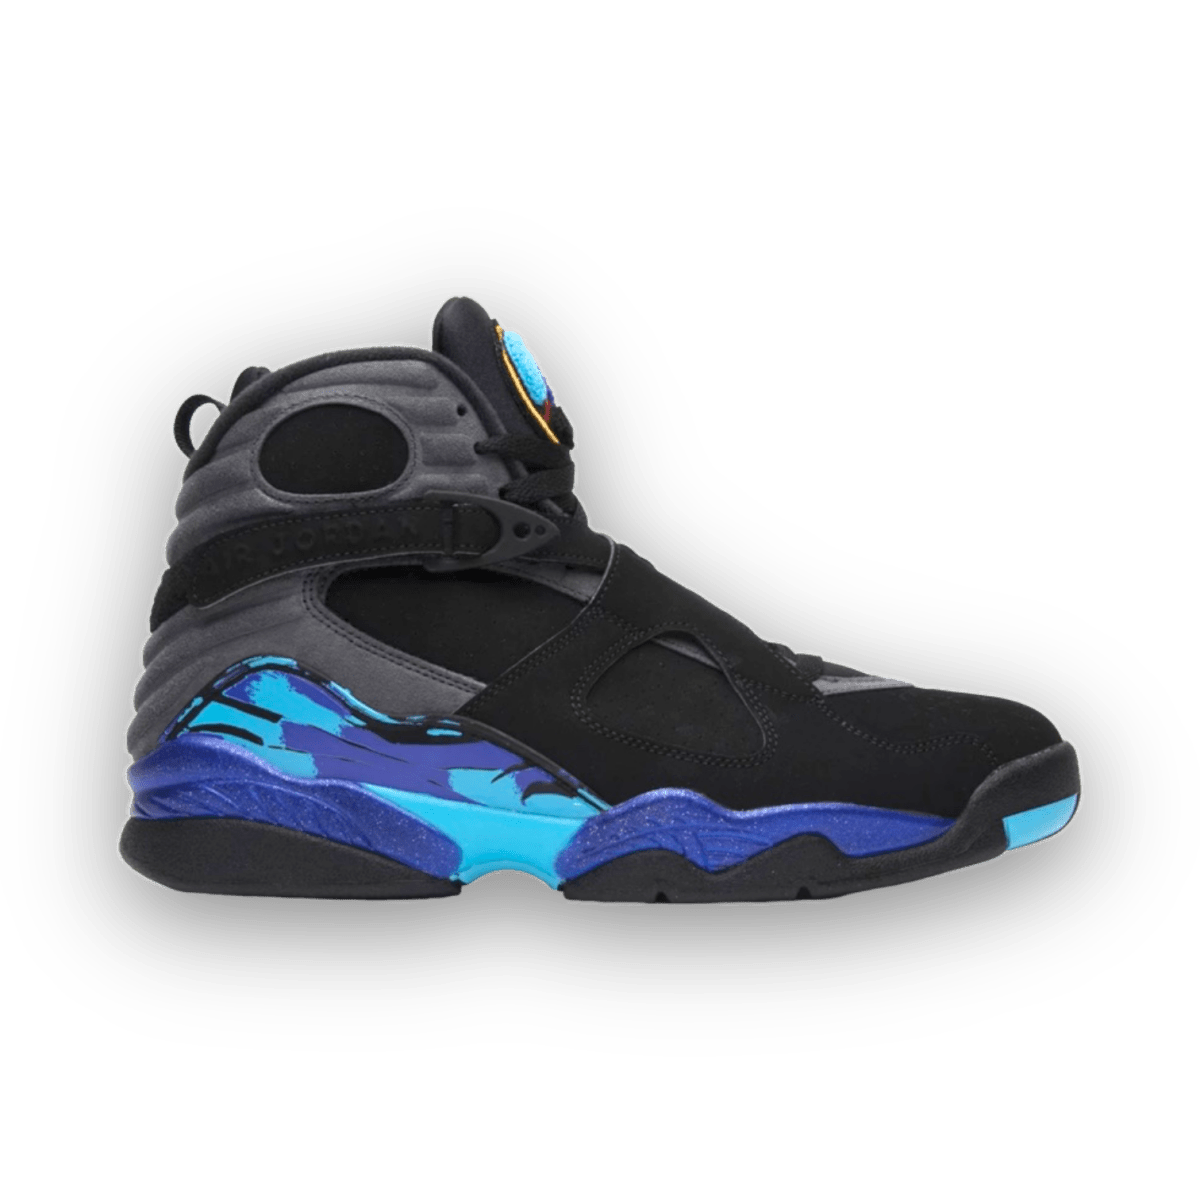 Air Jordan 8 Retro 'Aqua' 2015 - Gently Enjoyed (Used) Men 8.5 - High Sneaker - Jawns on Fire Sneakers & Streetwear